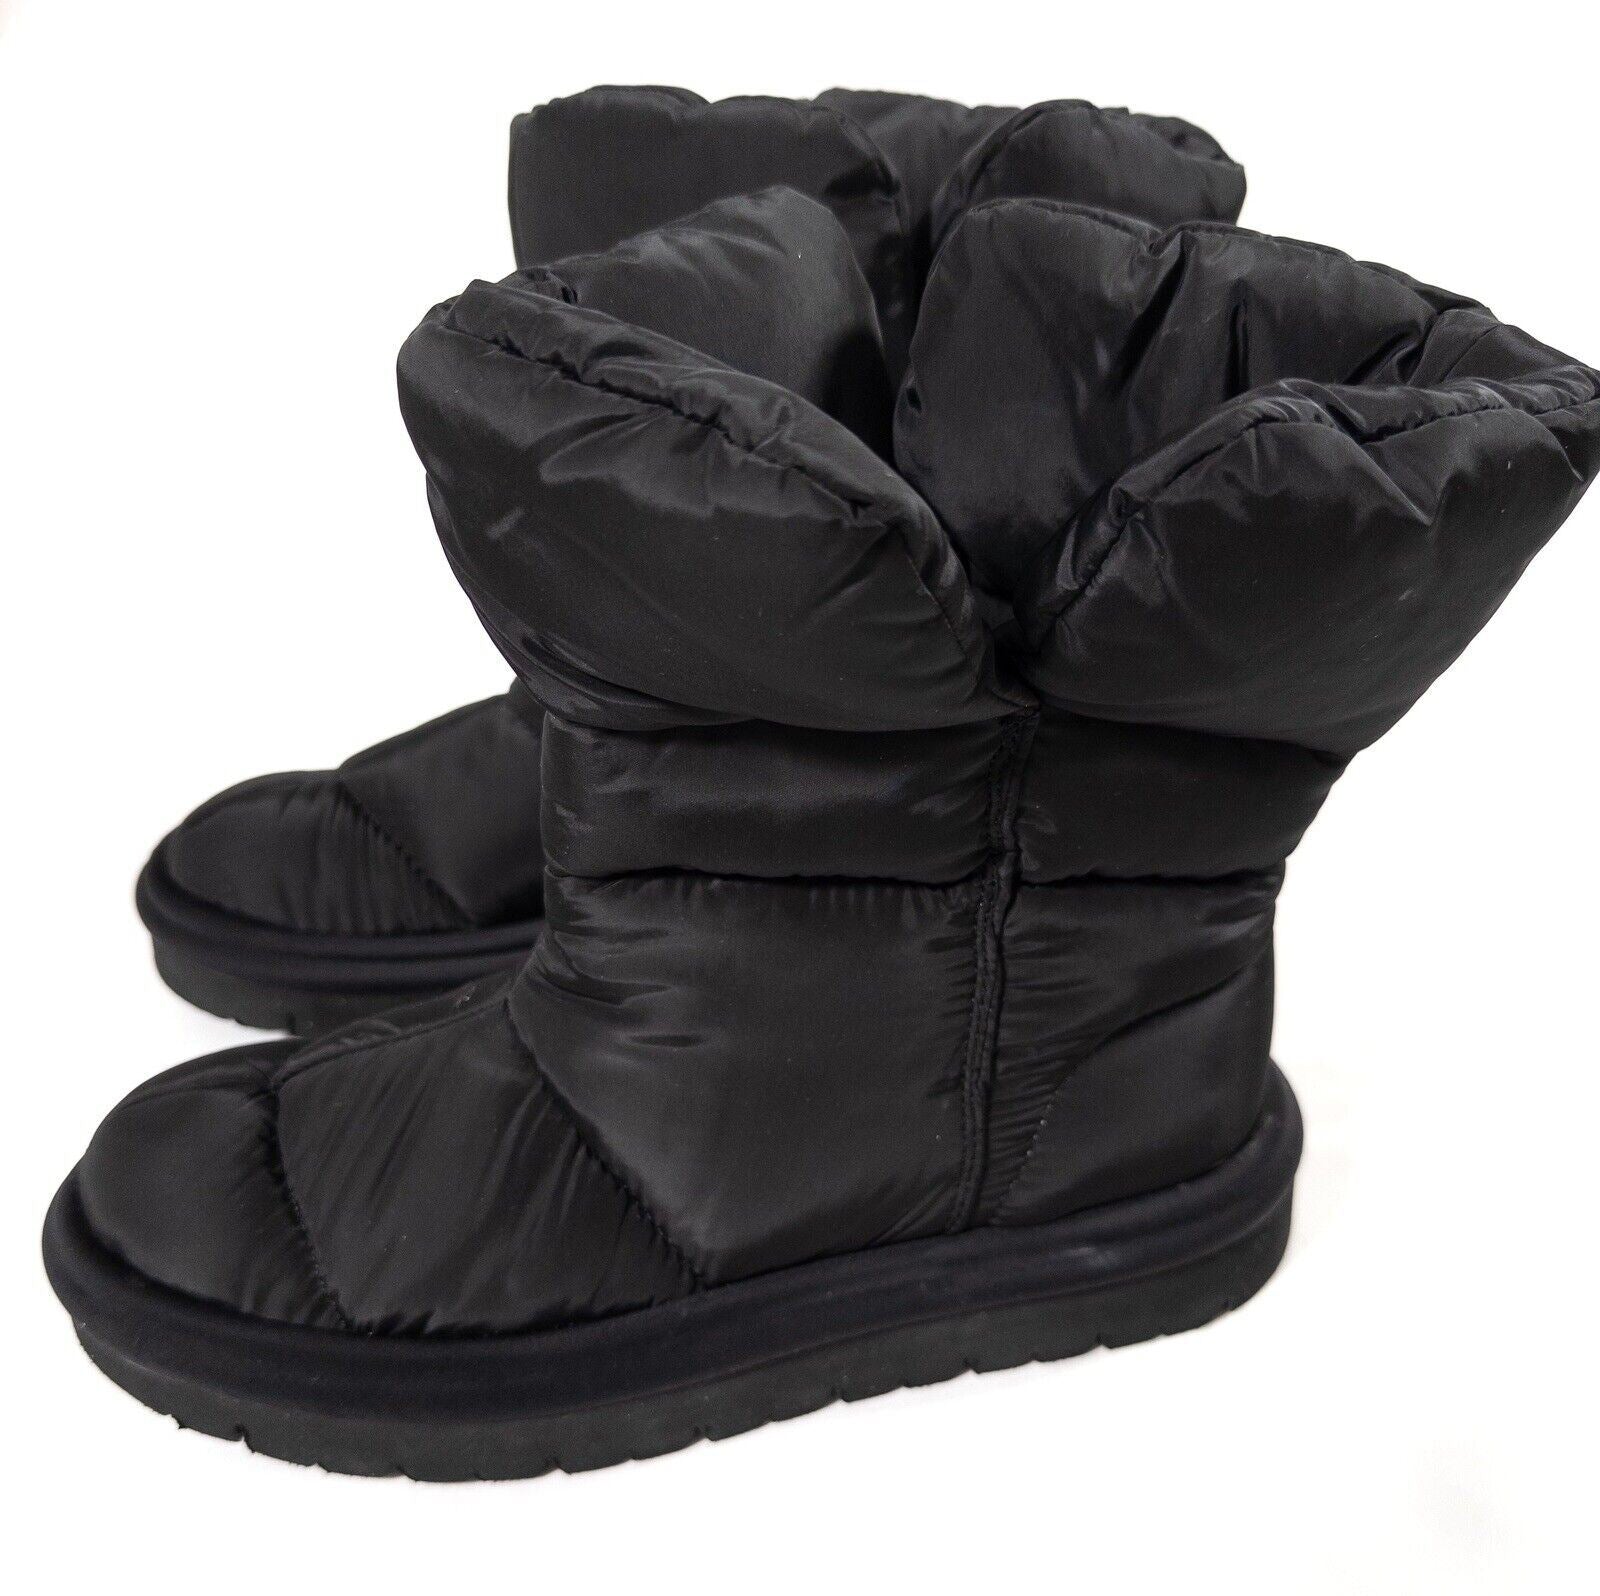 ZARA Women's Padded Black Ankle Boots Size UK 4